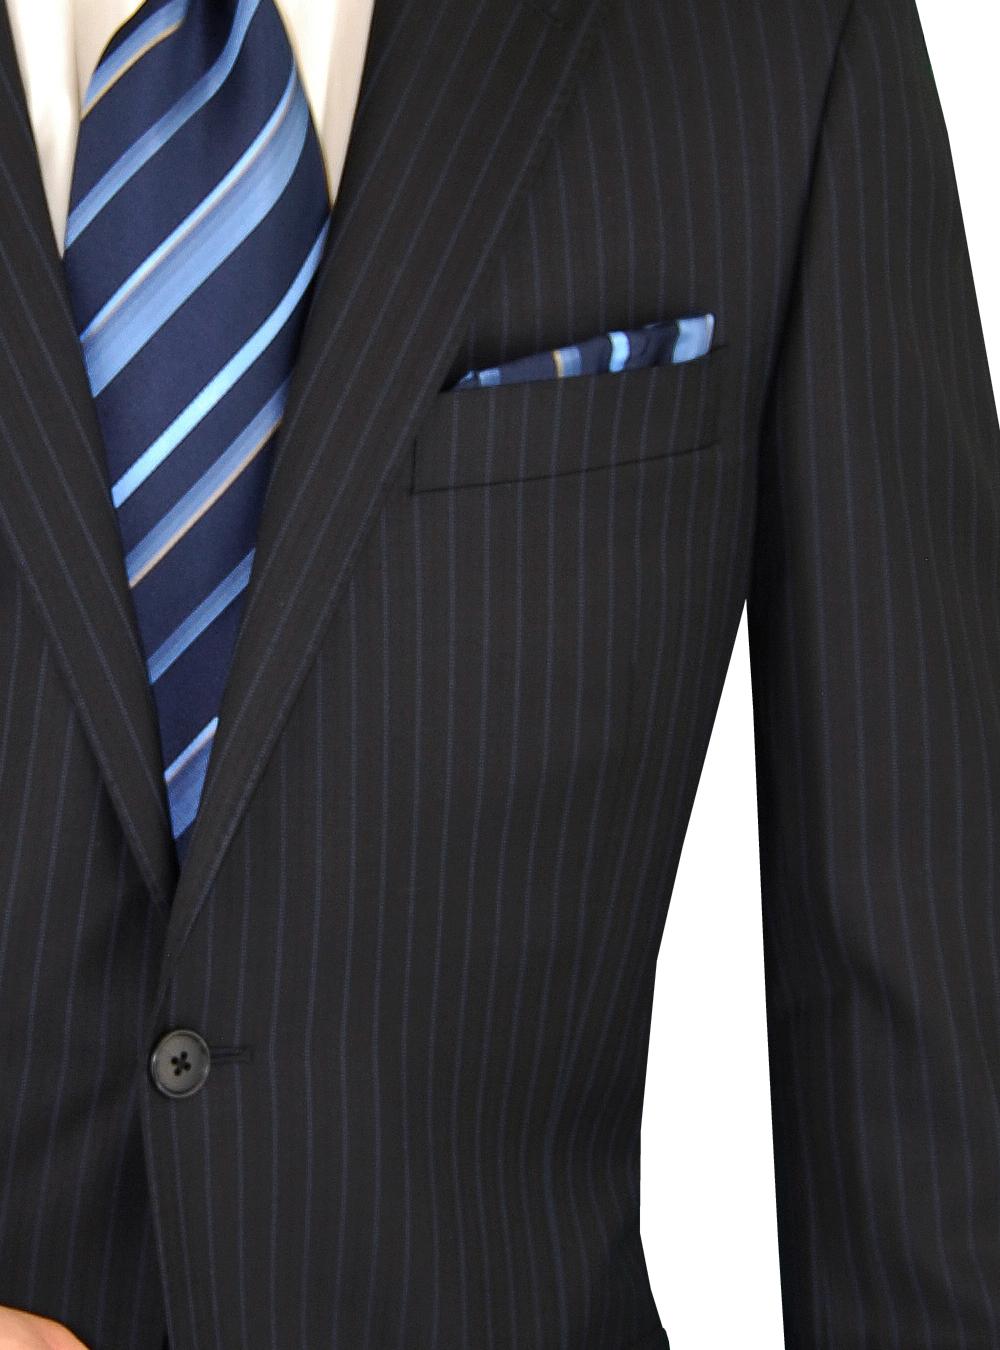 LN LUCIANO NATAZZI Italian Men's Suit 160'S Canali Cashmere Wool 2 Button Stripe Navy Stripe - image 5 of 5